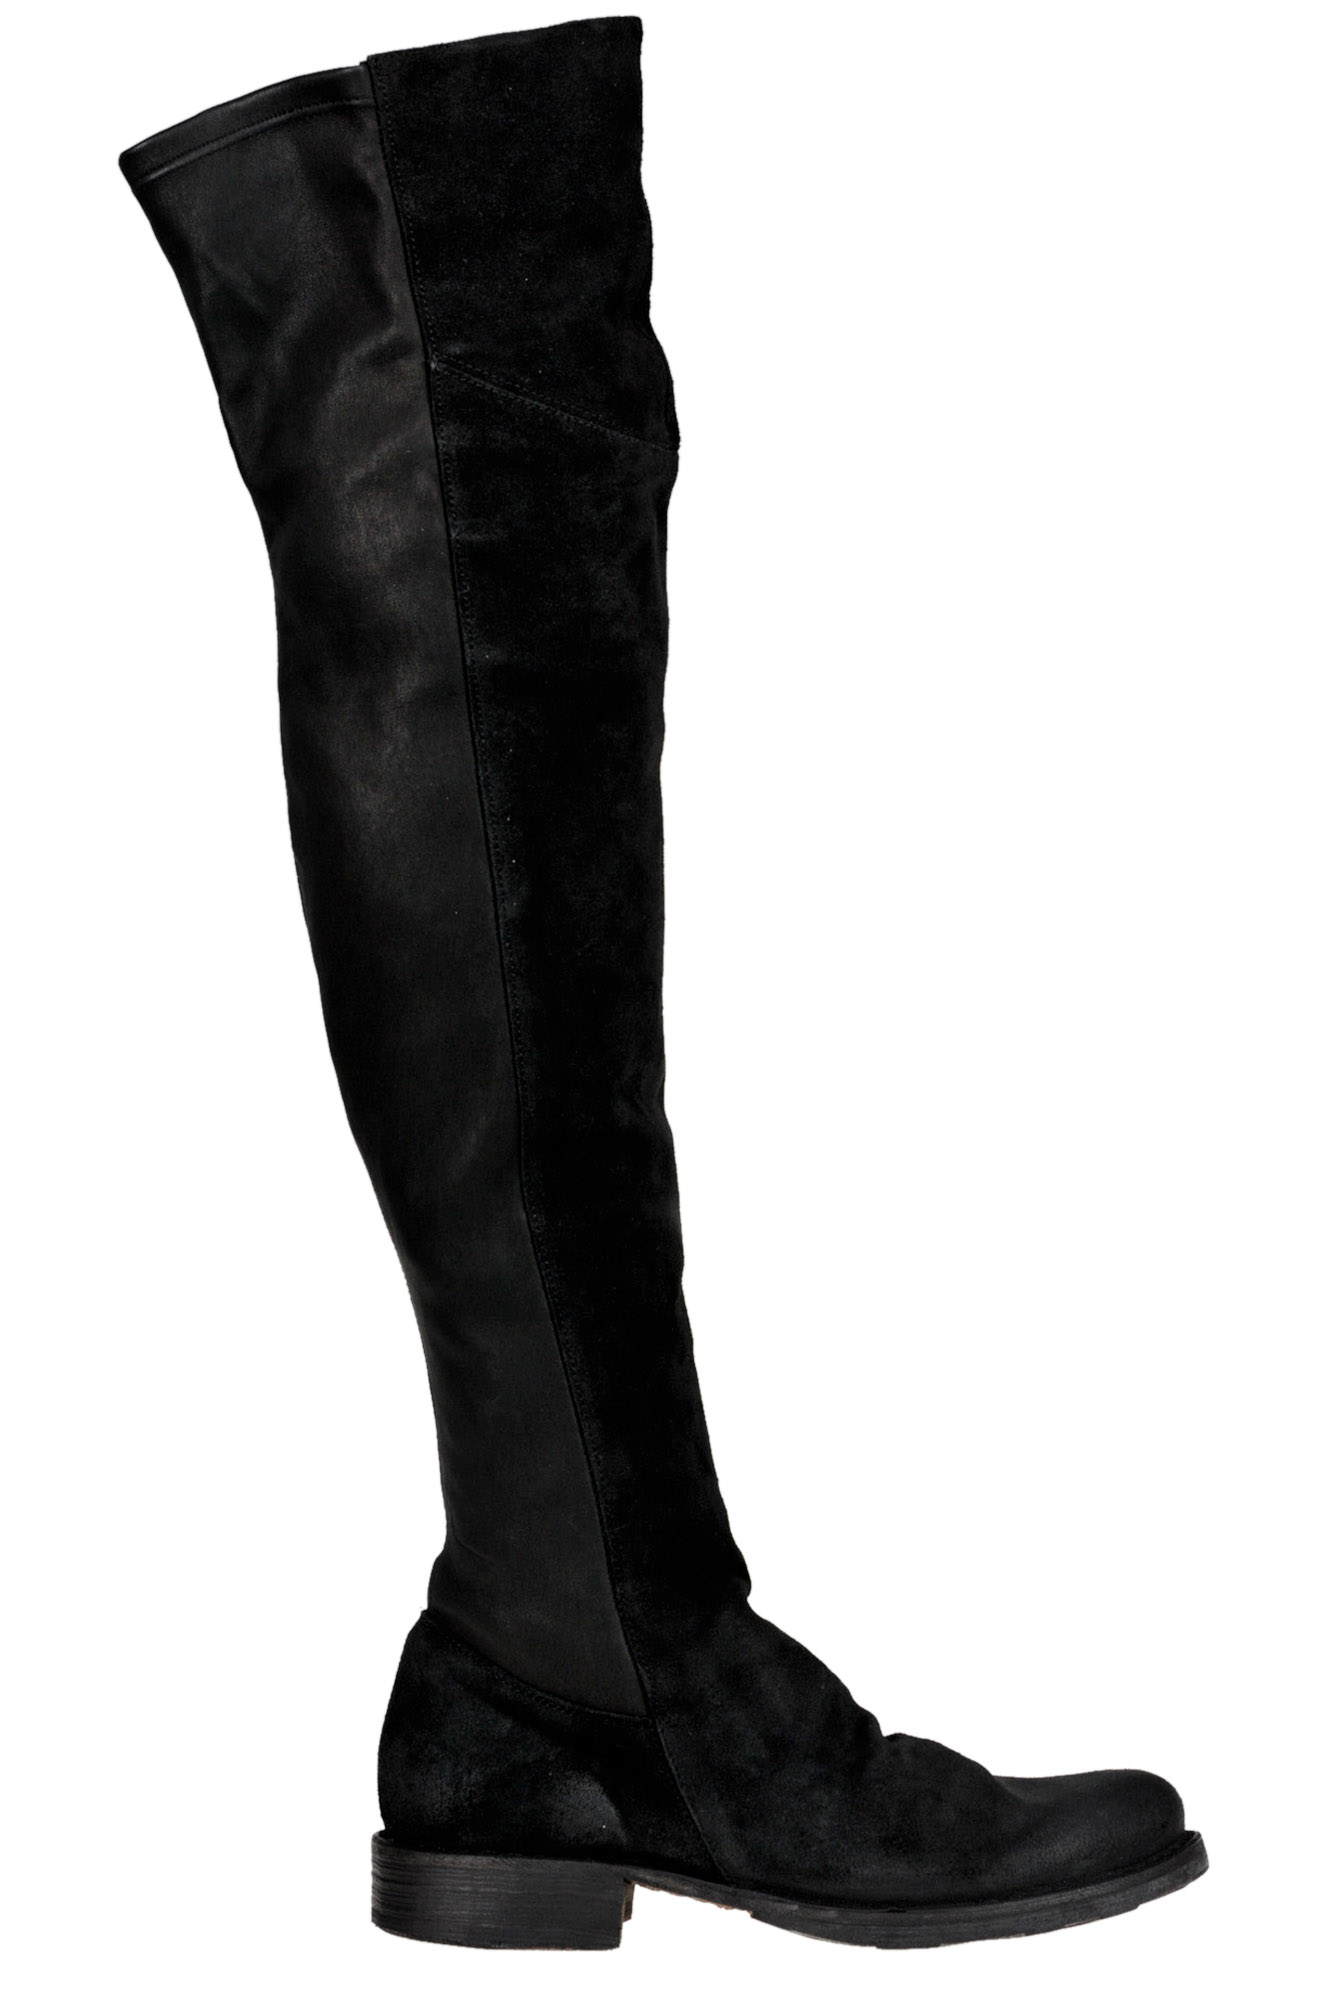 Fiorentini + Baker Evita Suede Over The Knee Boots In Black